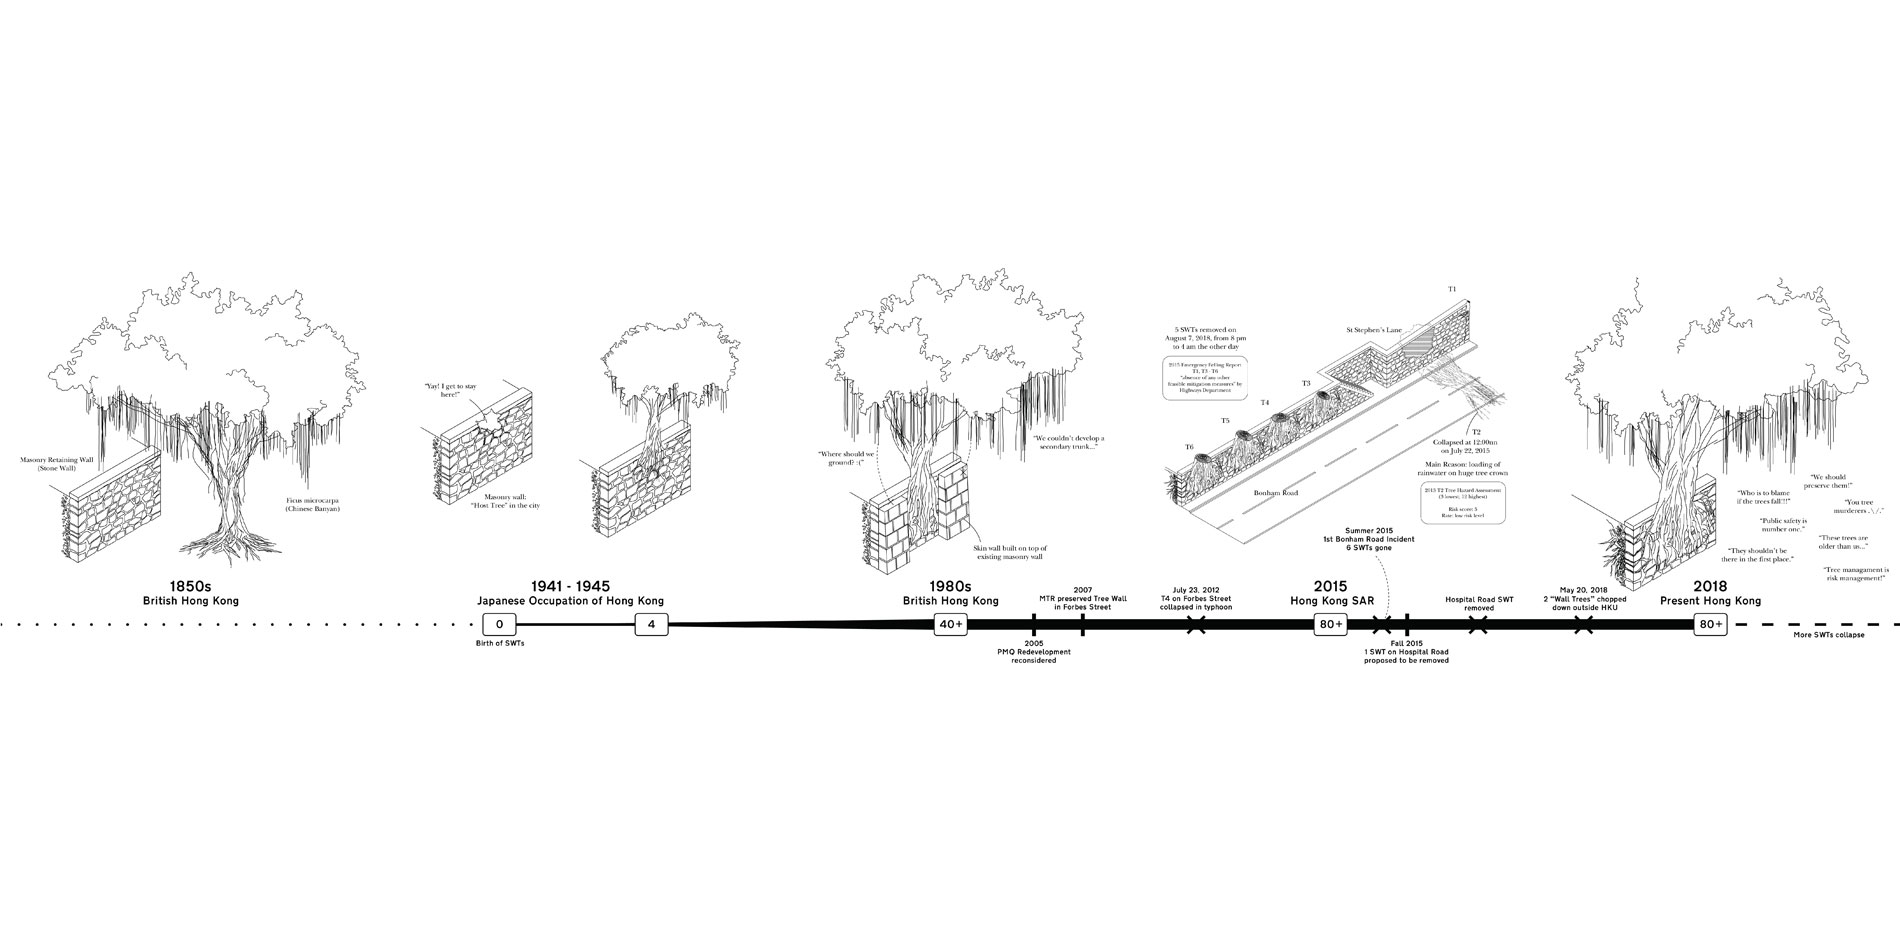 Stone Wall Tree - Development Timeline